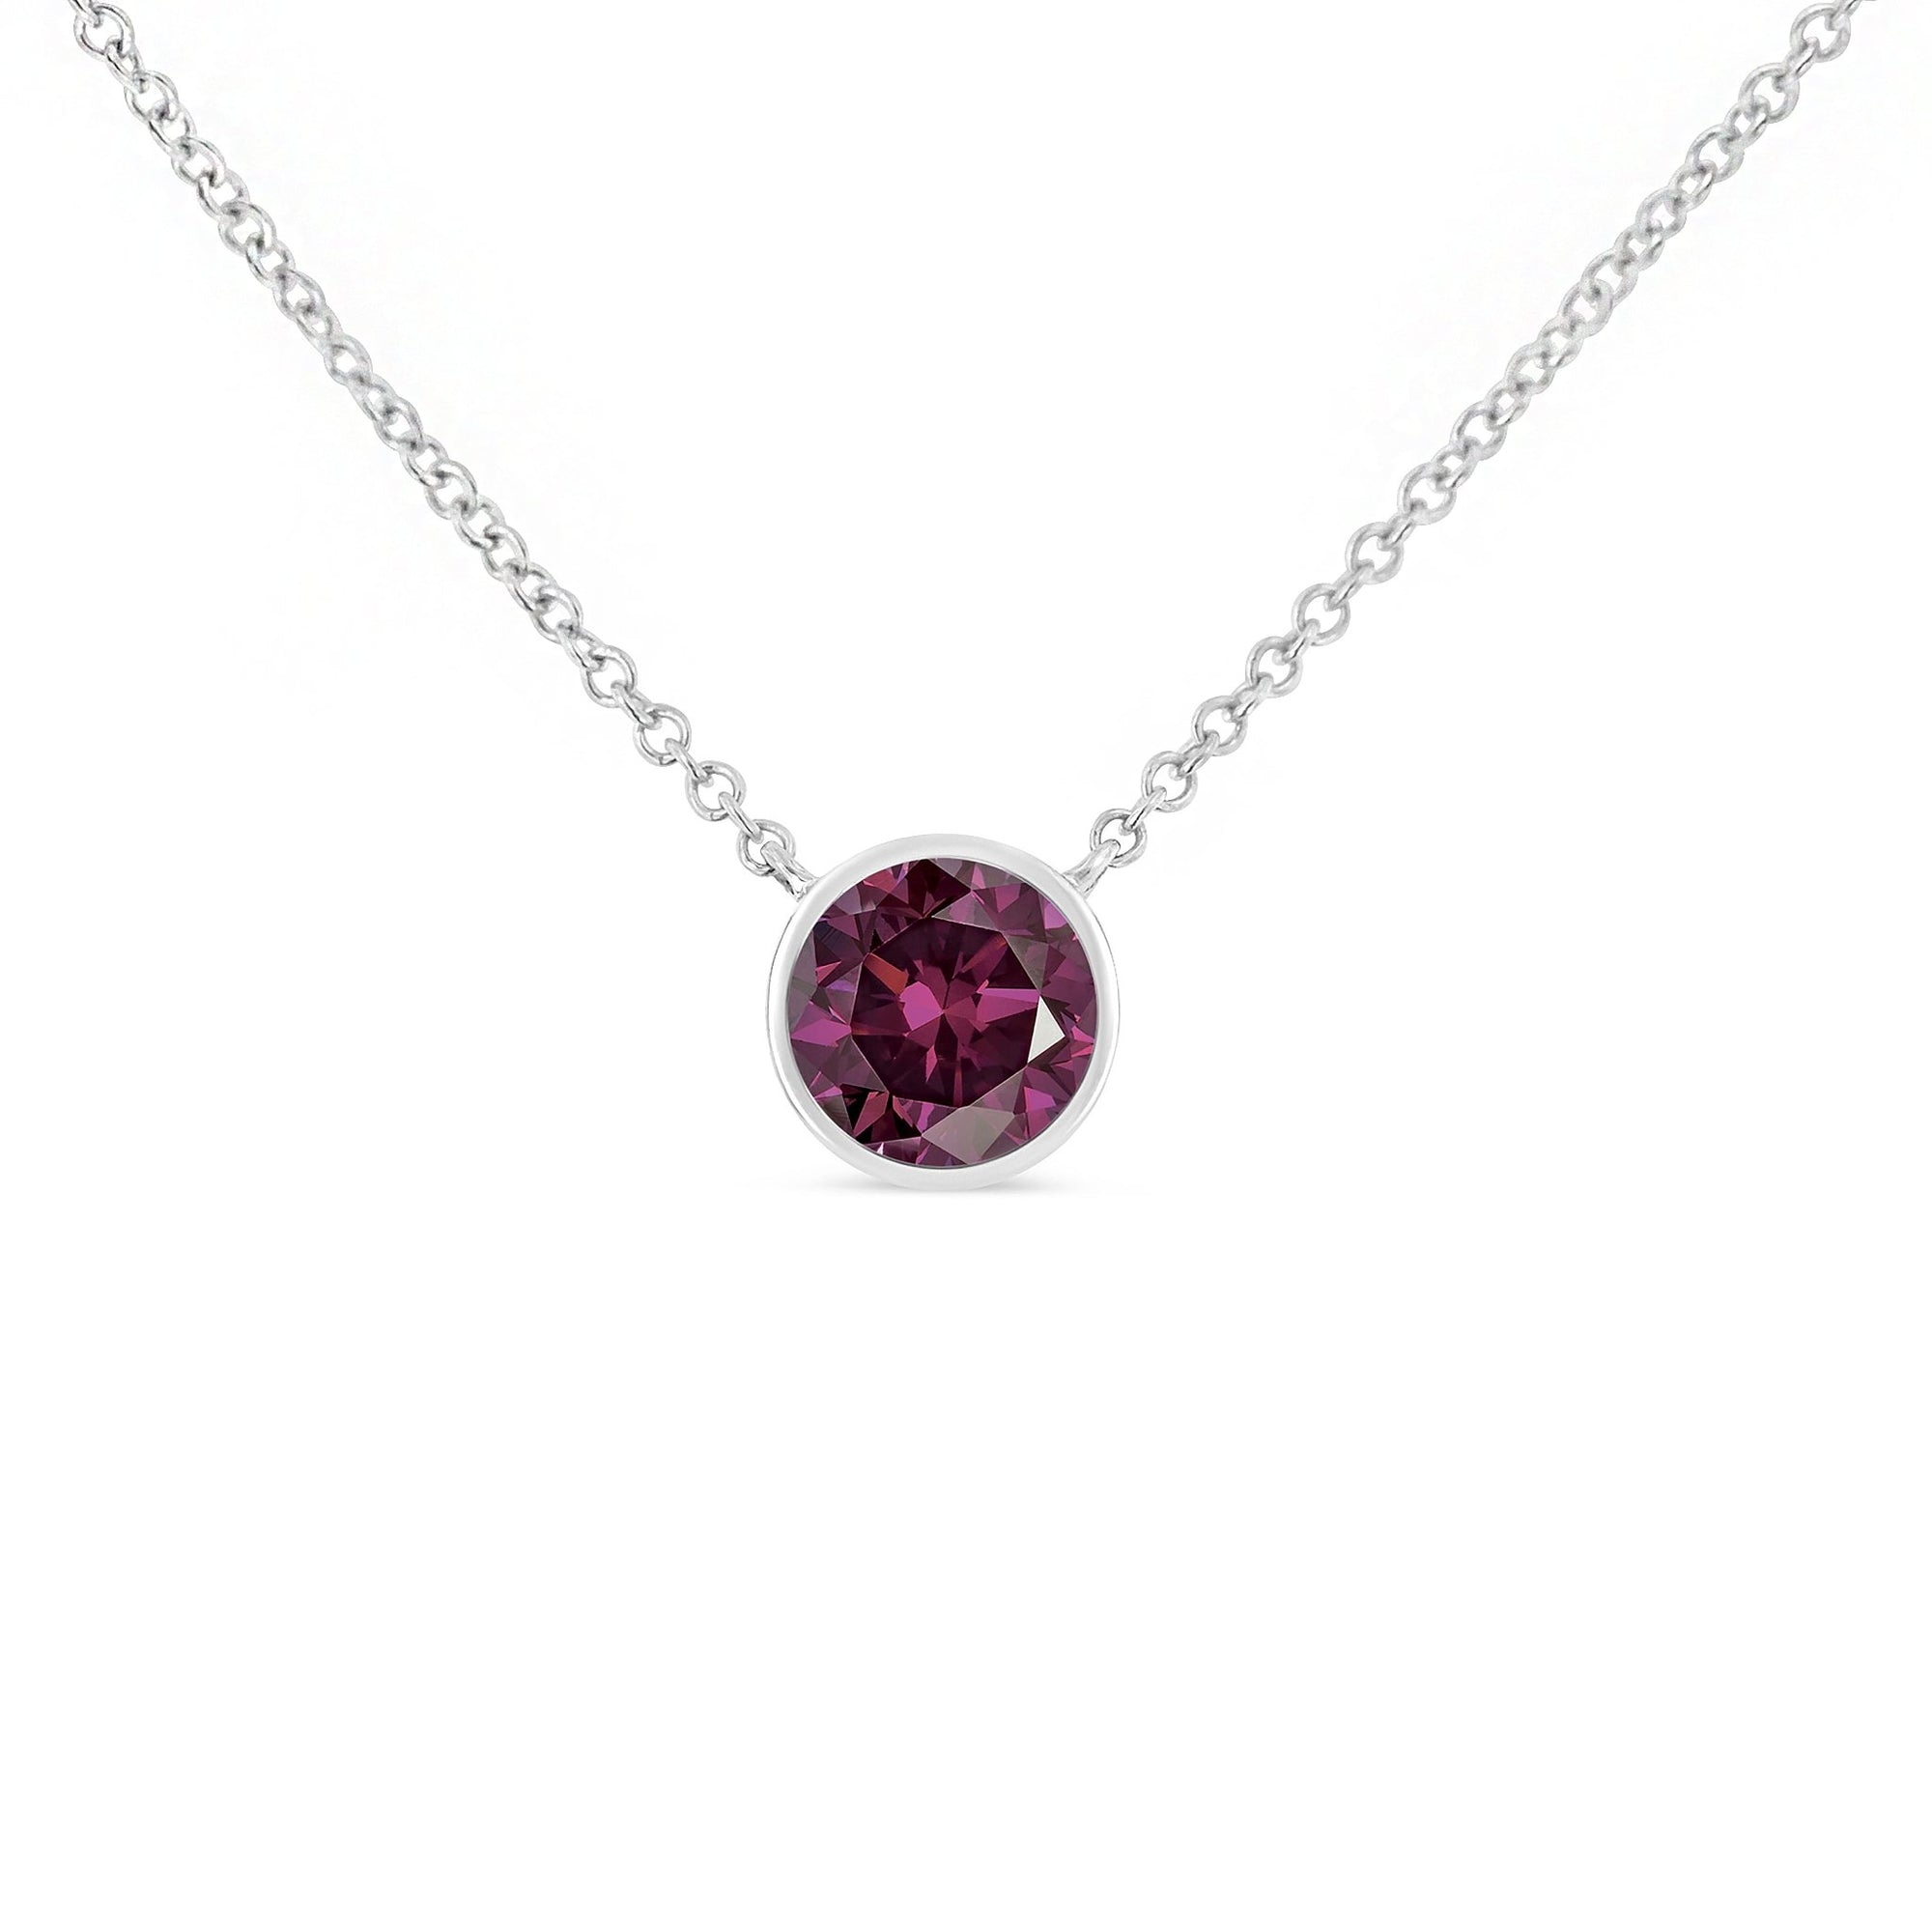 .925 Sterling Silver 3.5mm Red Garnet Gemstone Solitaire 18" Pendant Necklace - LinkagejewelrydesignLinkagejewelrydesign